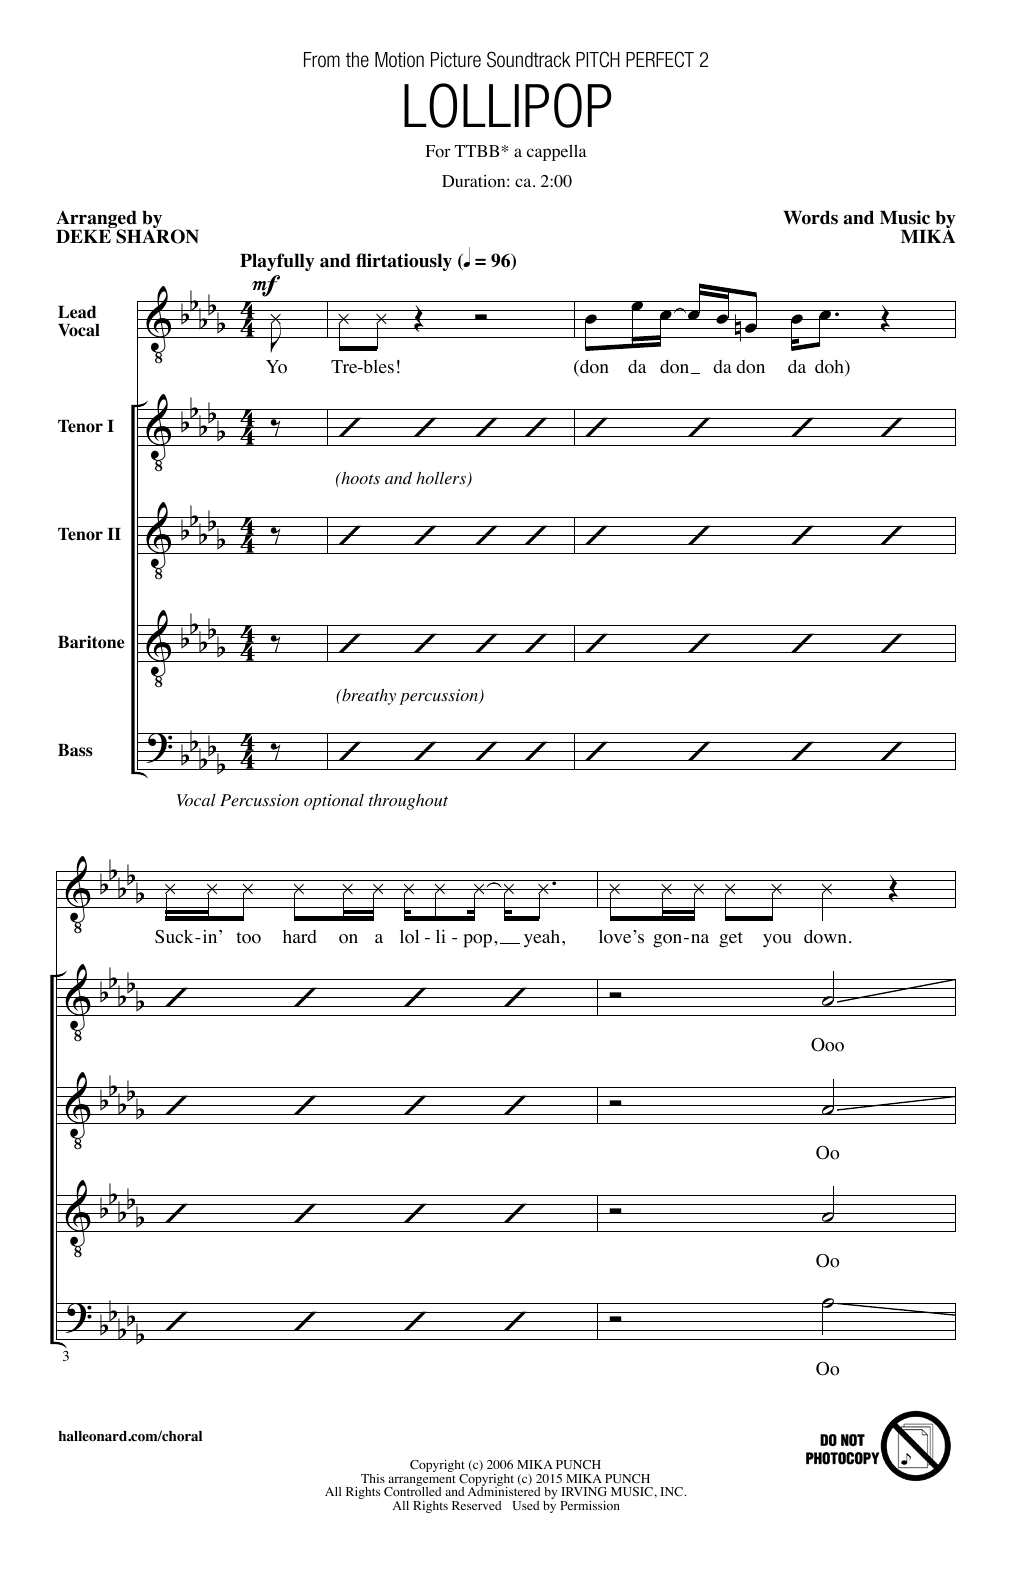 Deke Sharon Lollipop Sheet Music Notes & Chords for TTBB - Download or Print PDF